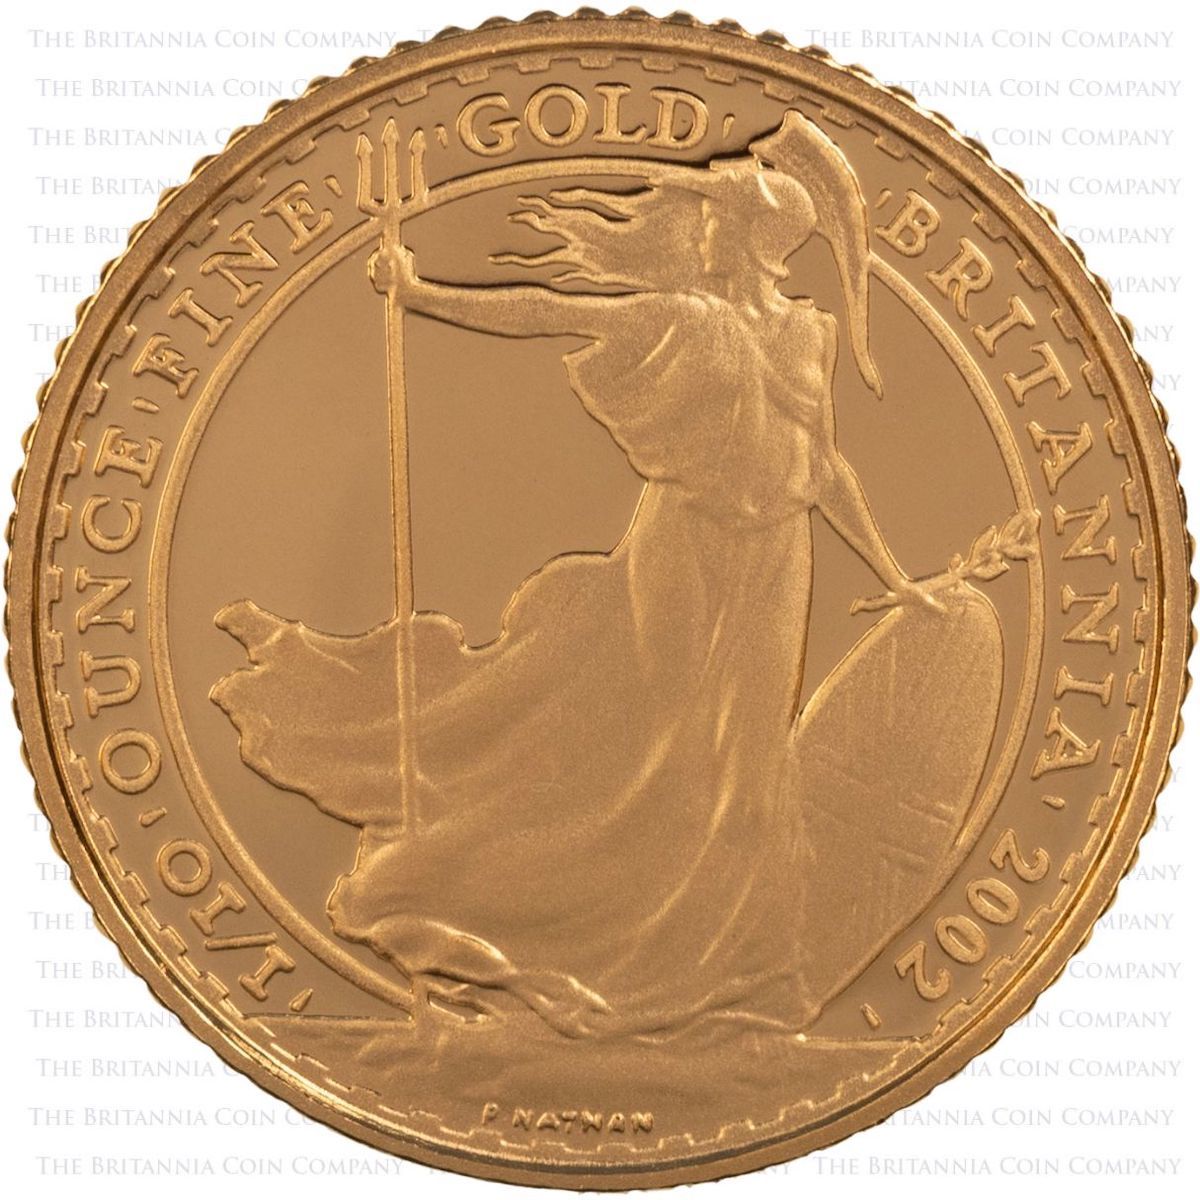 2002 Britannia Tenth Ounce Gold Proof Coin Error Portrait Mule Reverse